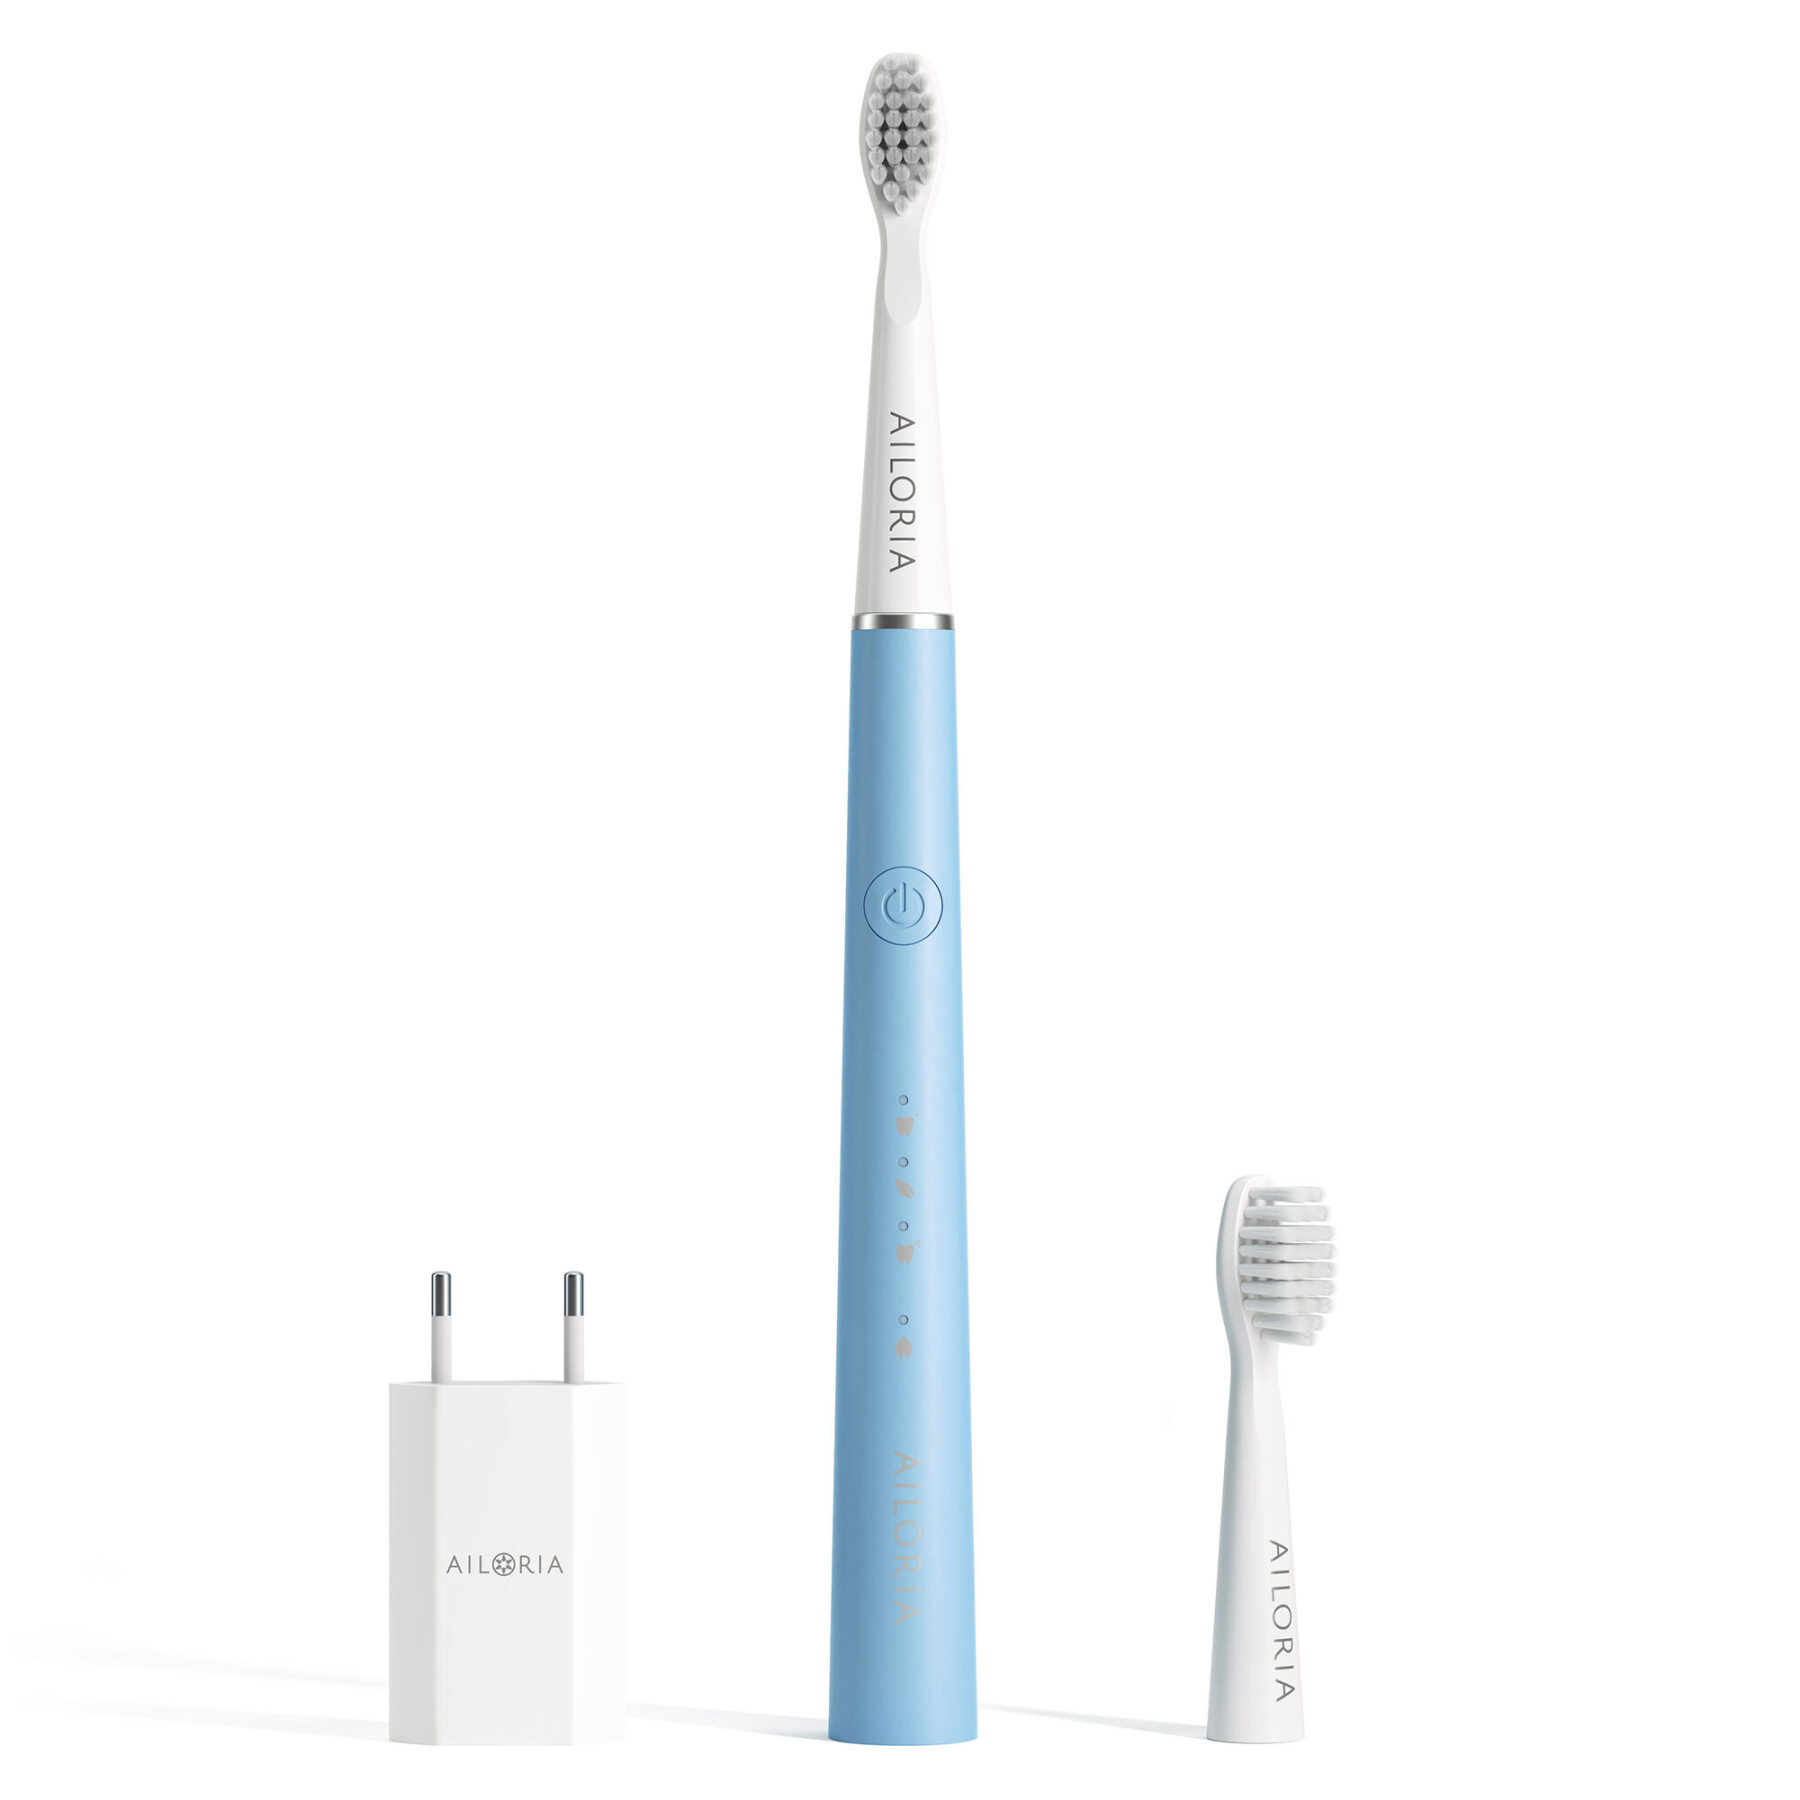 Escova de dentes usb com tecnologia sónica Ailoria Pro Smile